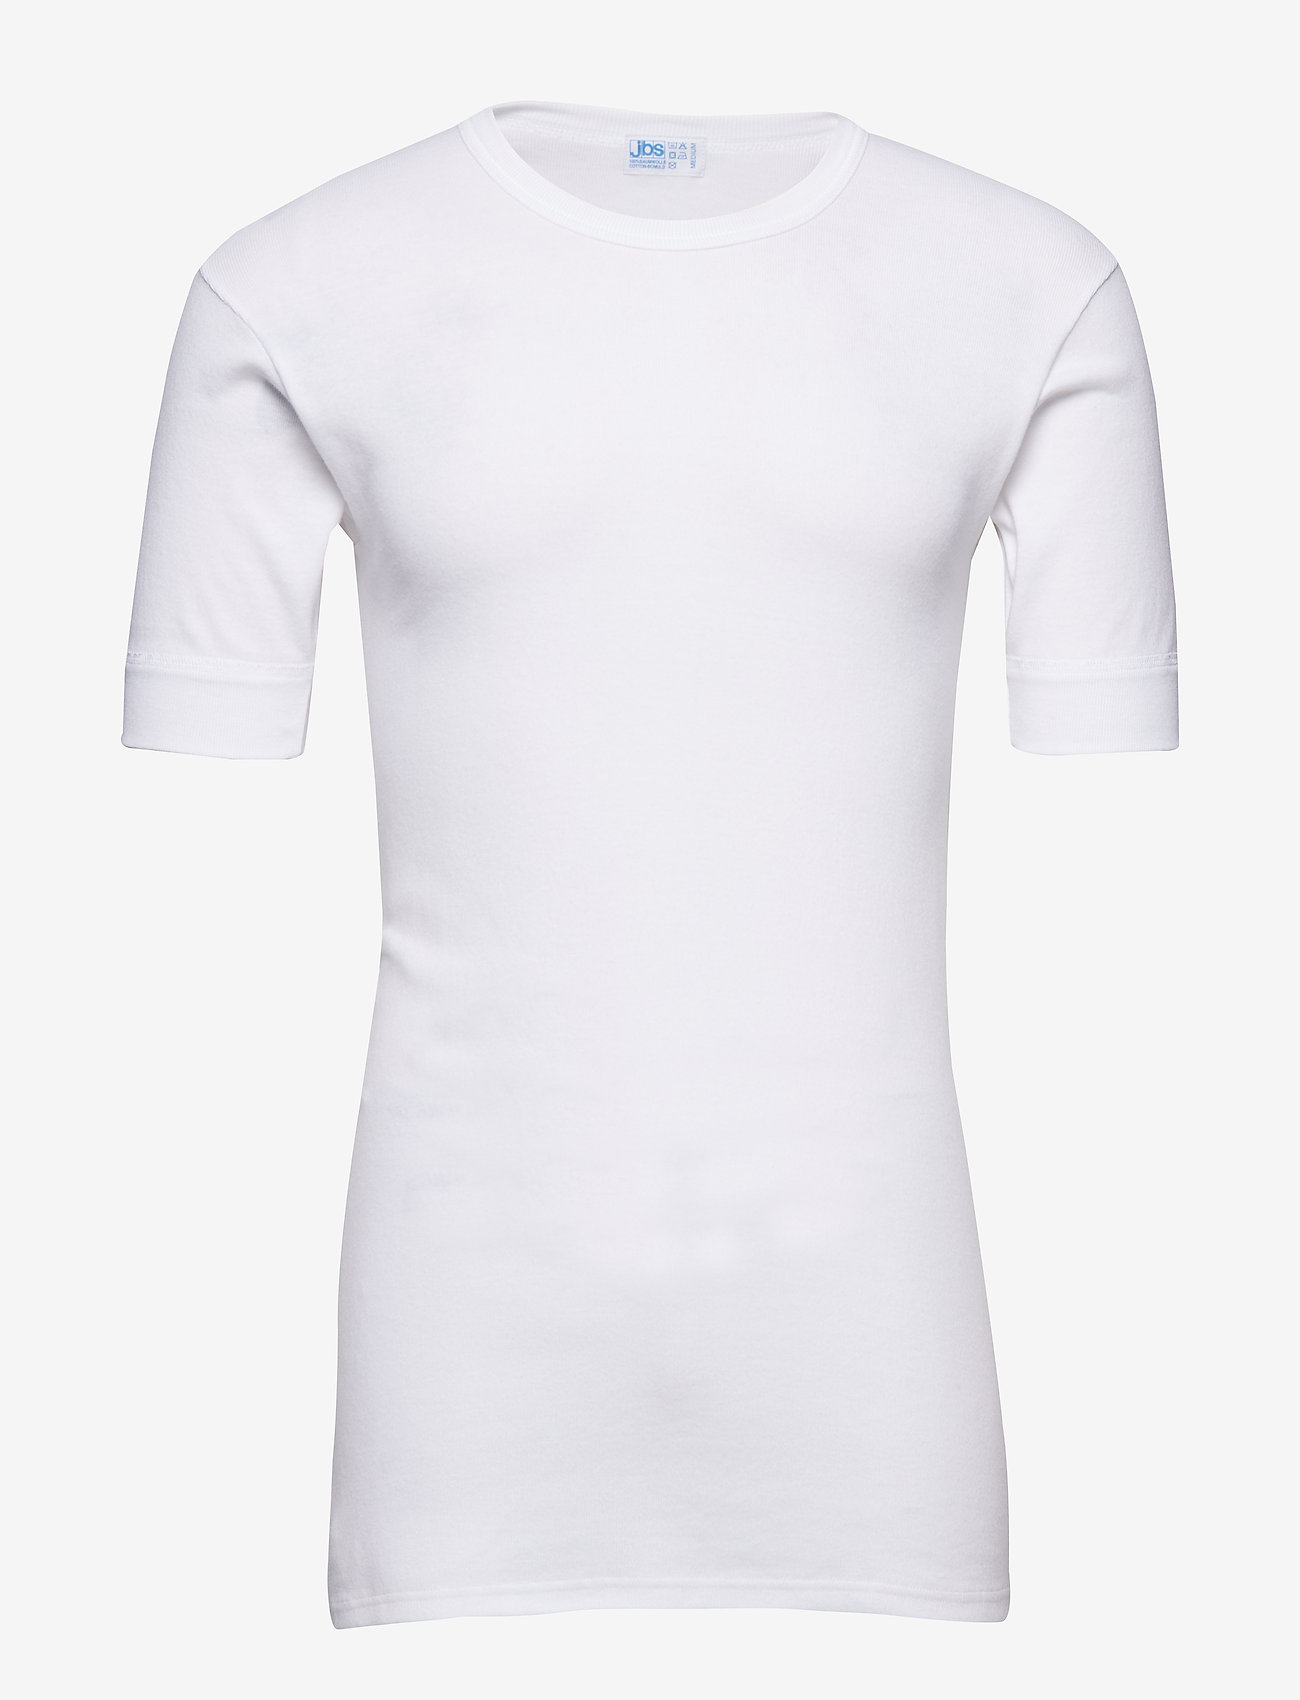 JBS - Original tee - basic t-shirts - white - 0